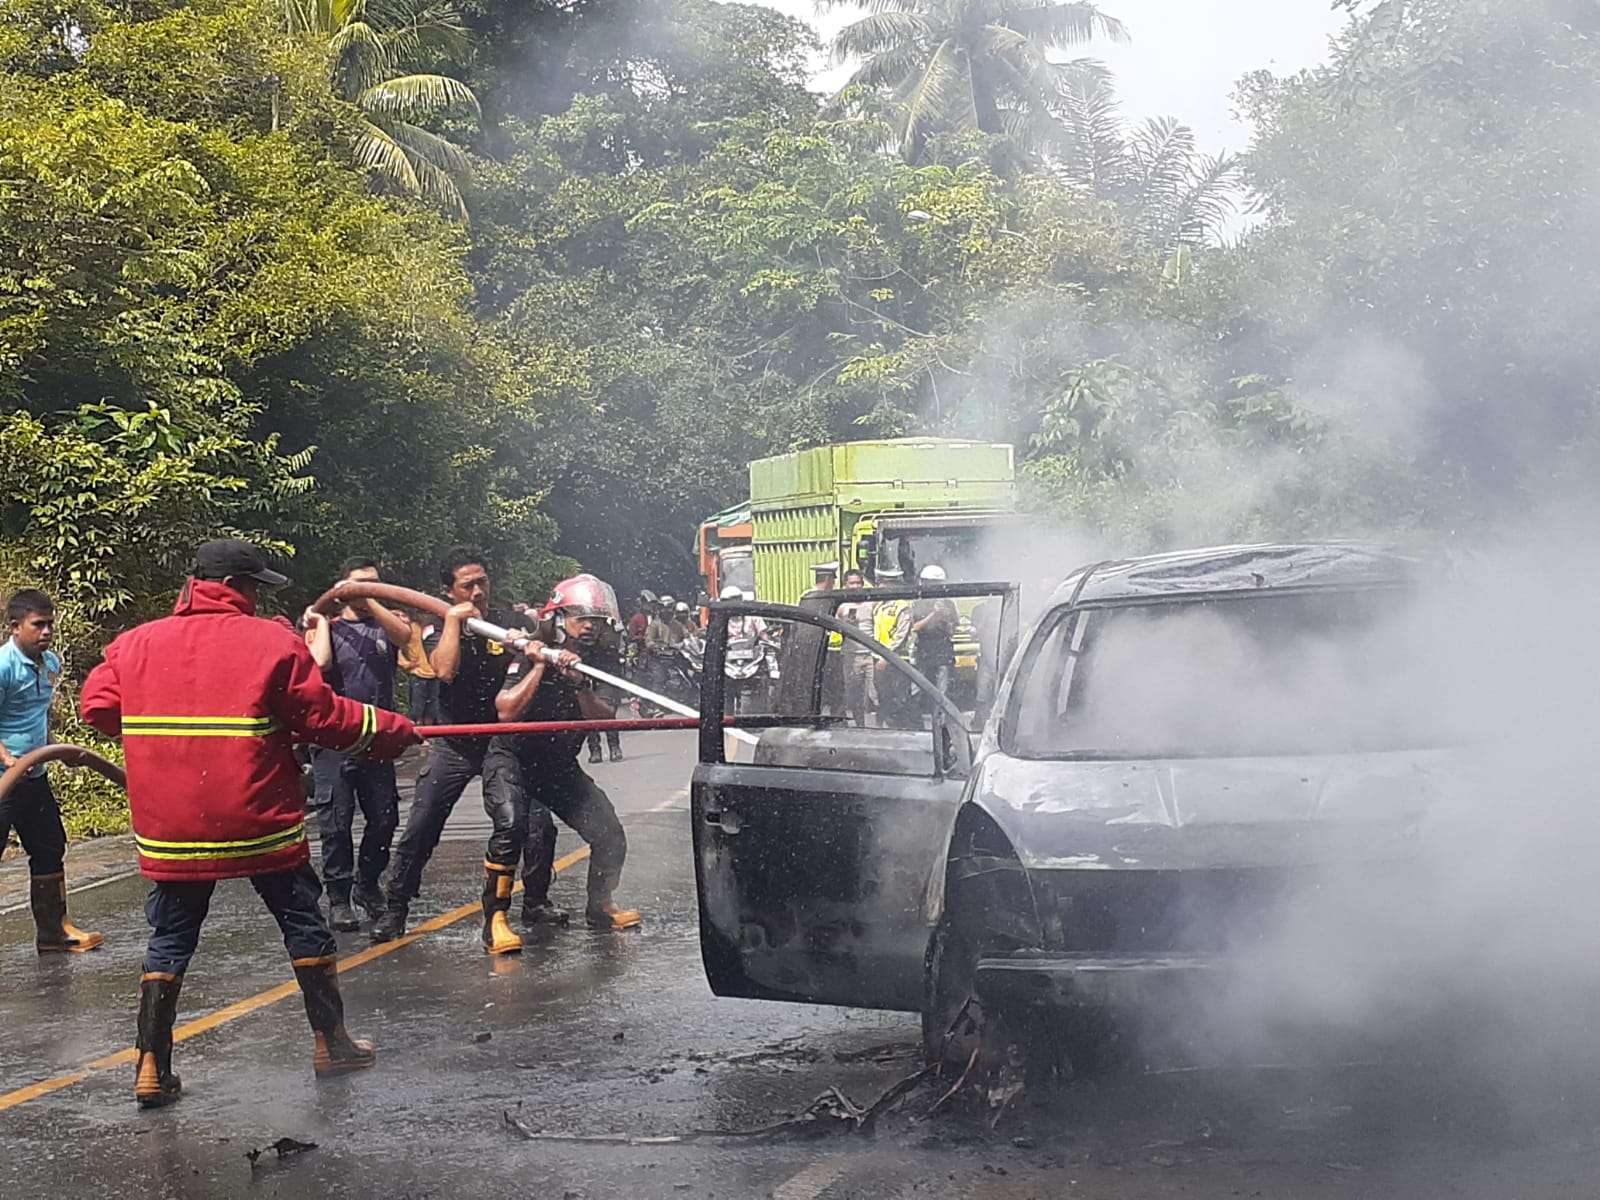 Livina Terbakar di Jalinbar Tanggamus, Berikut 5 Cara Pencegahan Mobil Terbakar